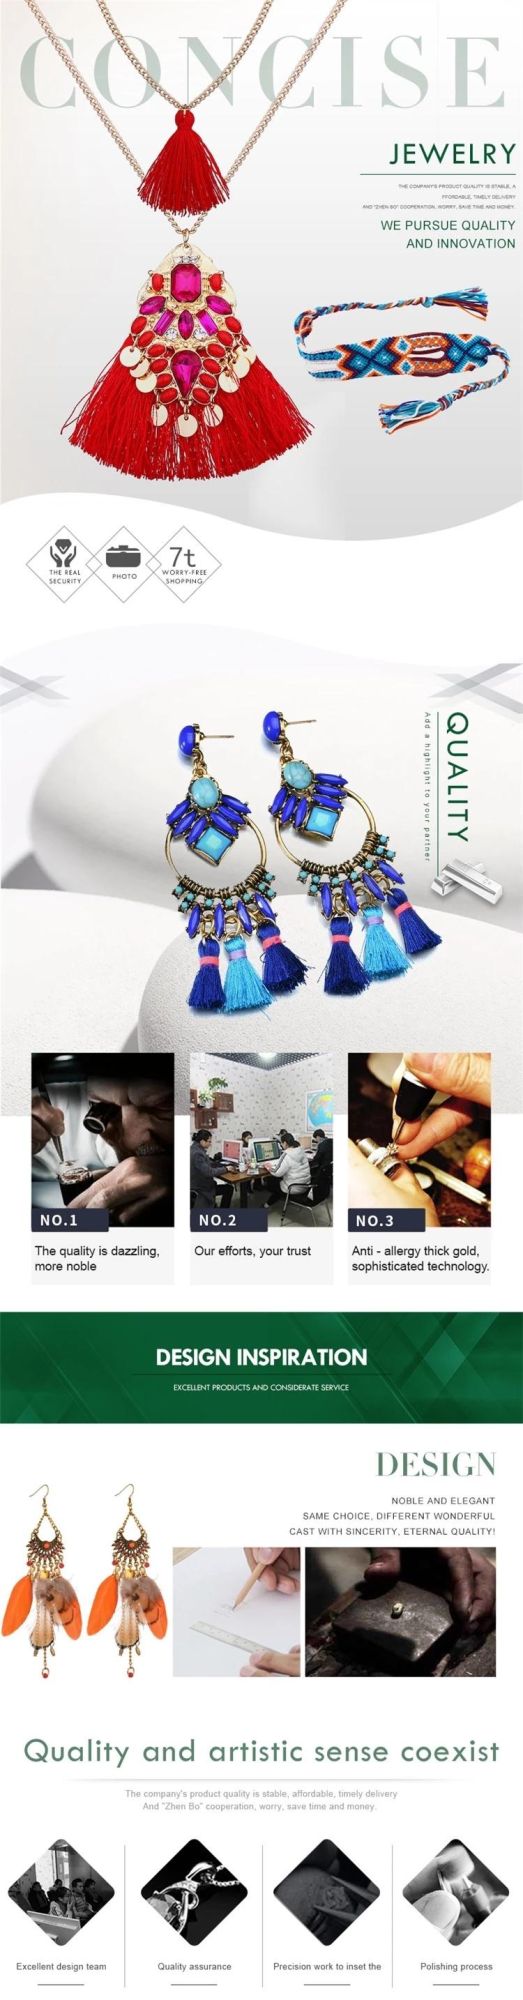 Luxury Jewelry Lady CZ Imitation Gift Stud Earring